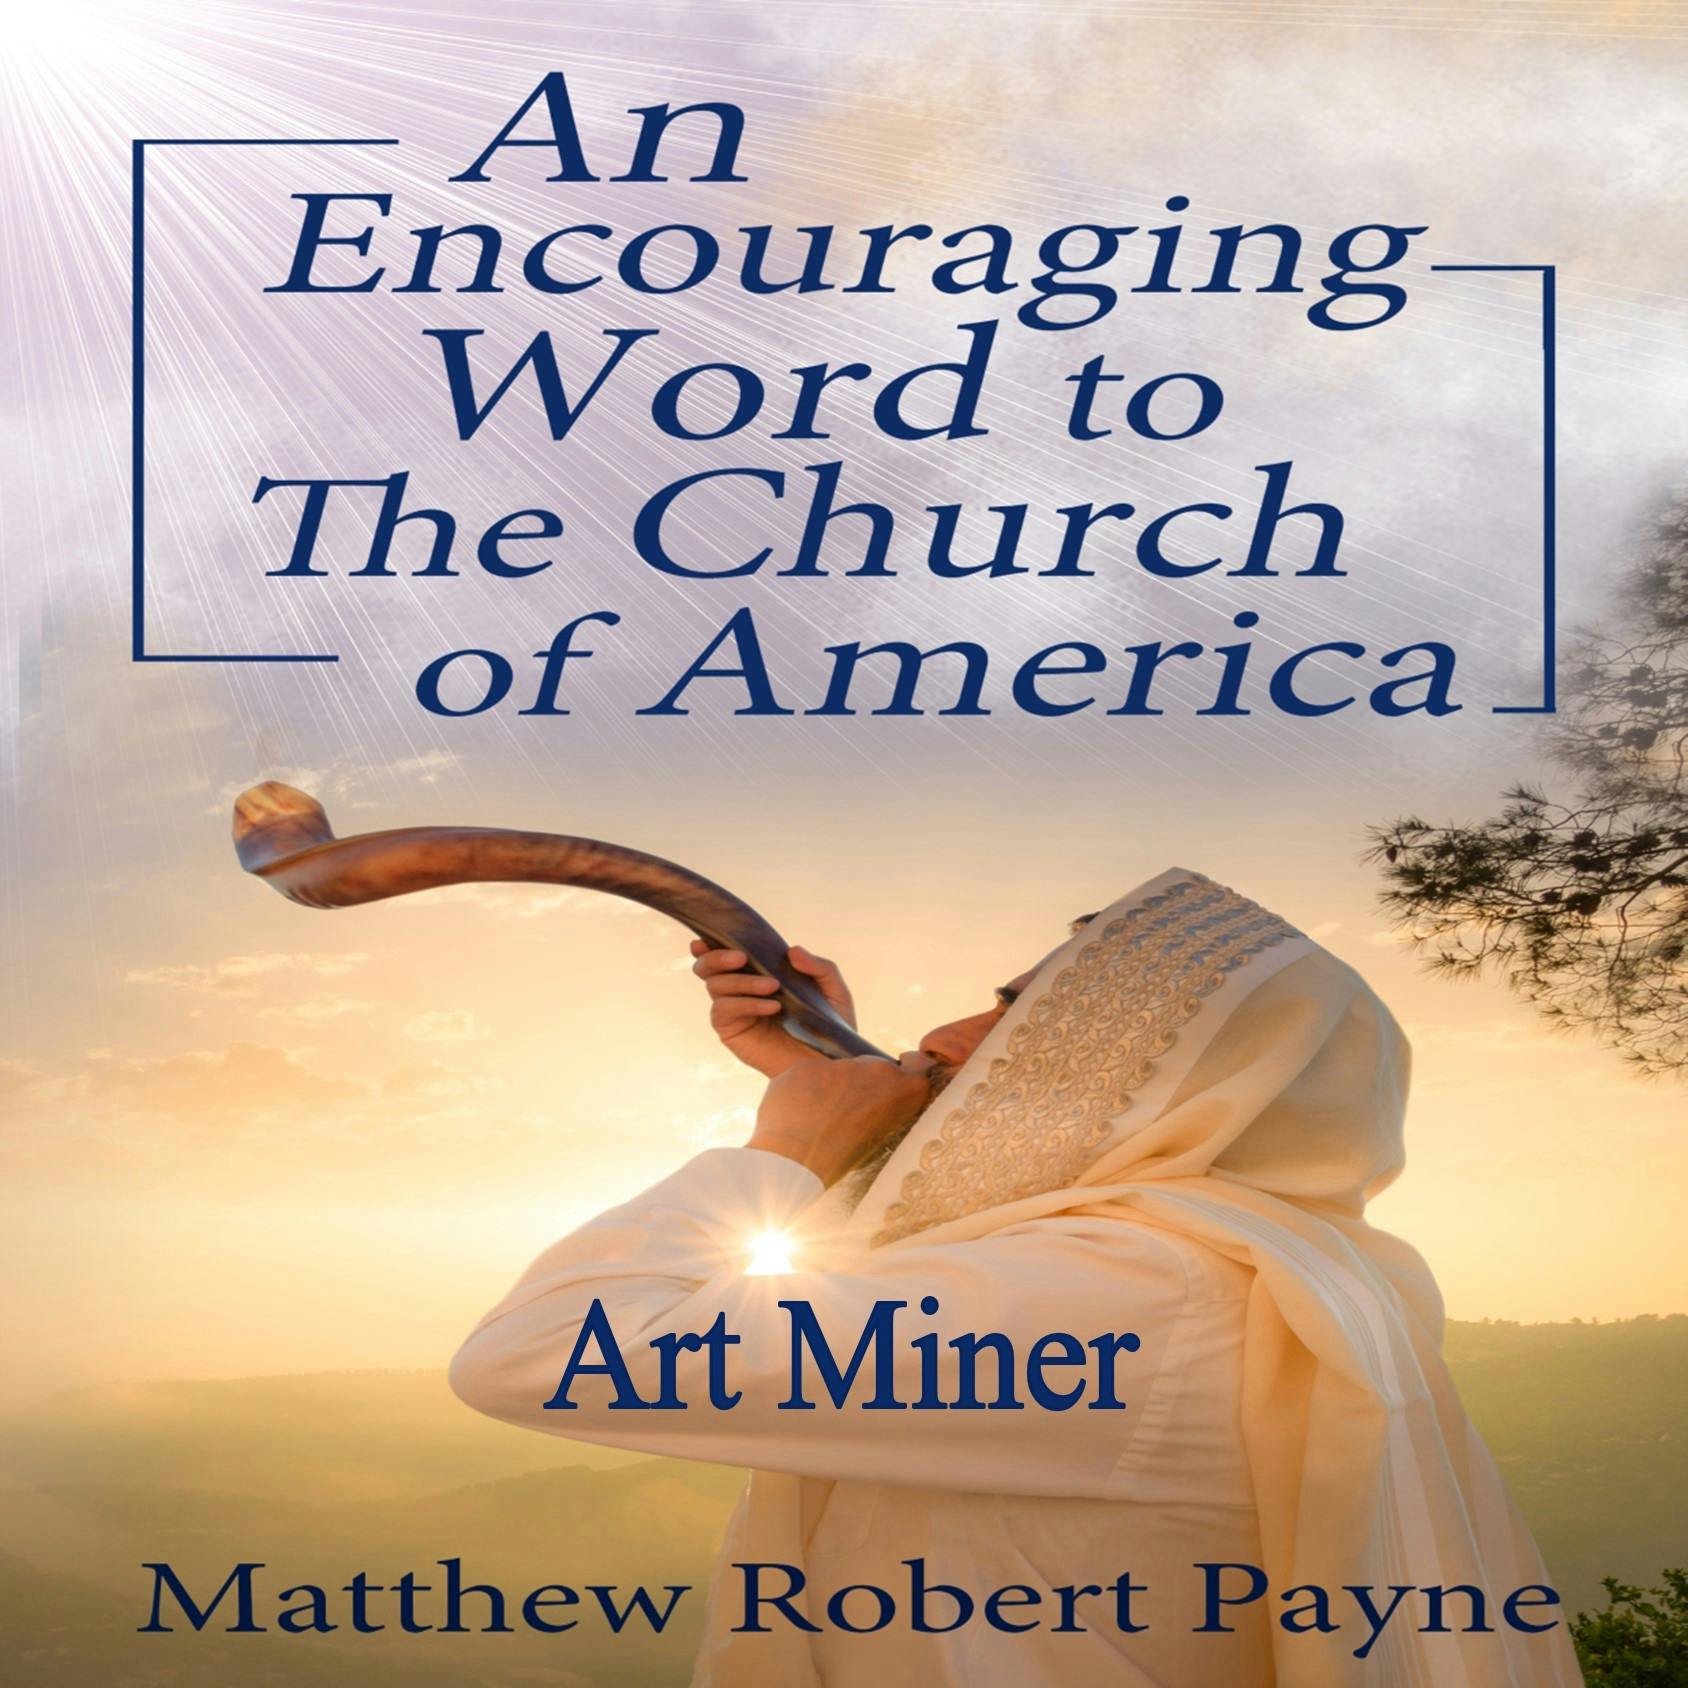 An Encouraging Prophetic Word to The Church of America - Art Miner, Matthew Robert Payne